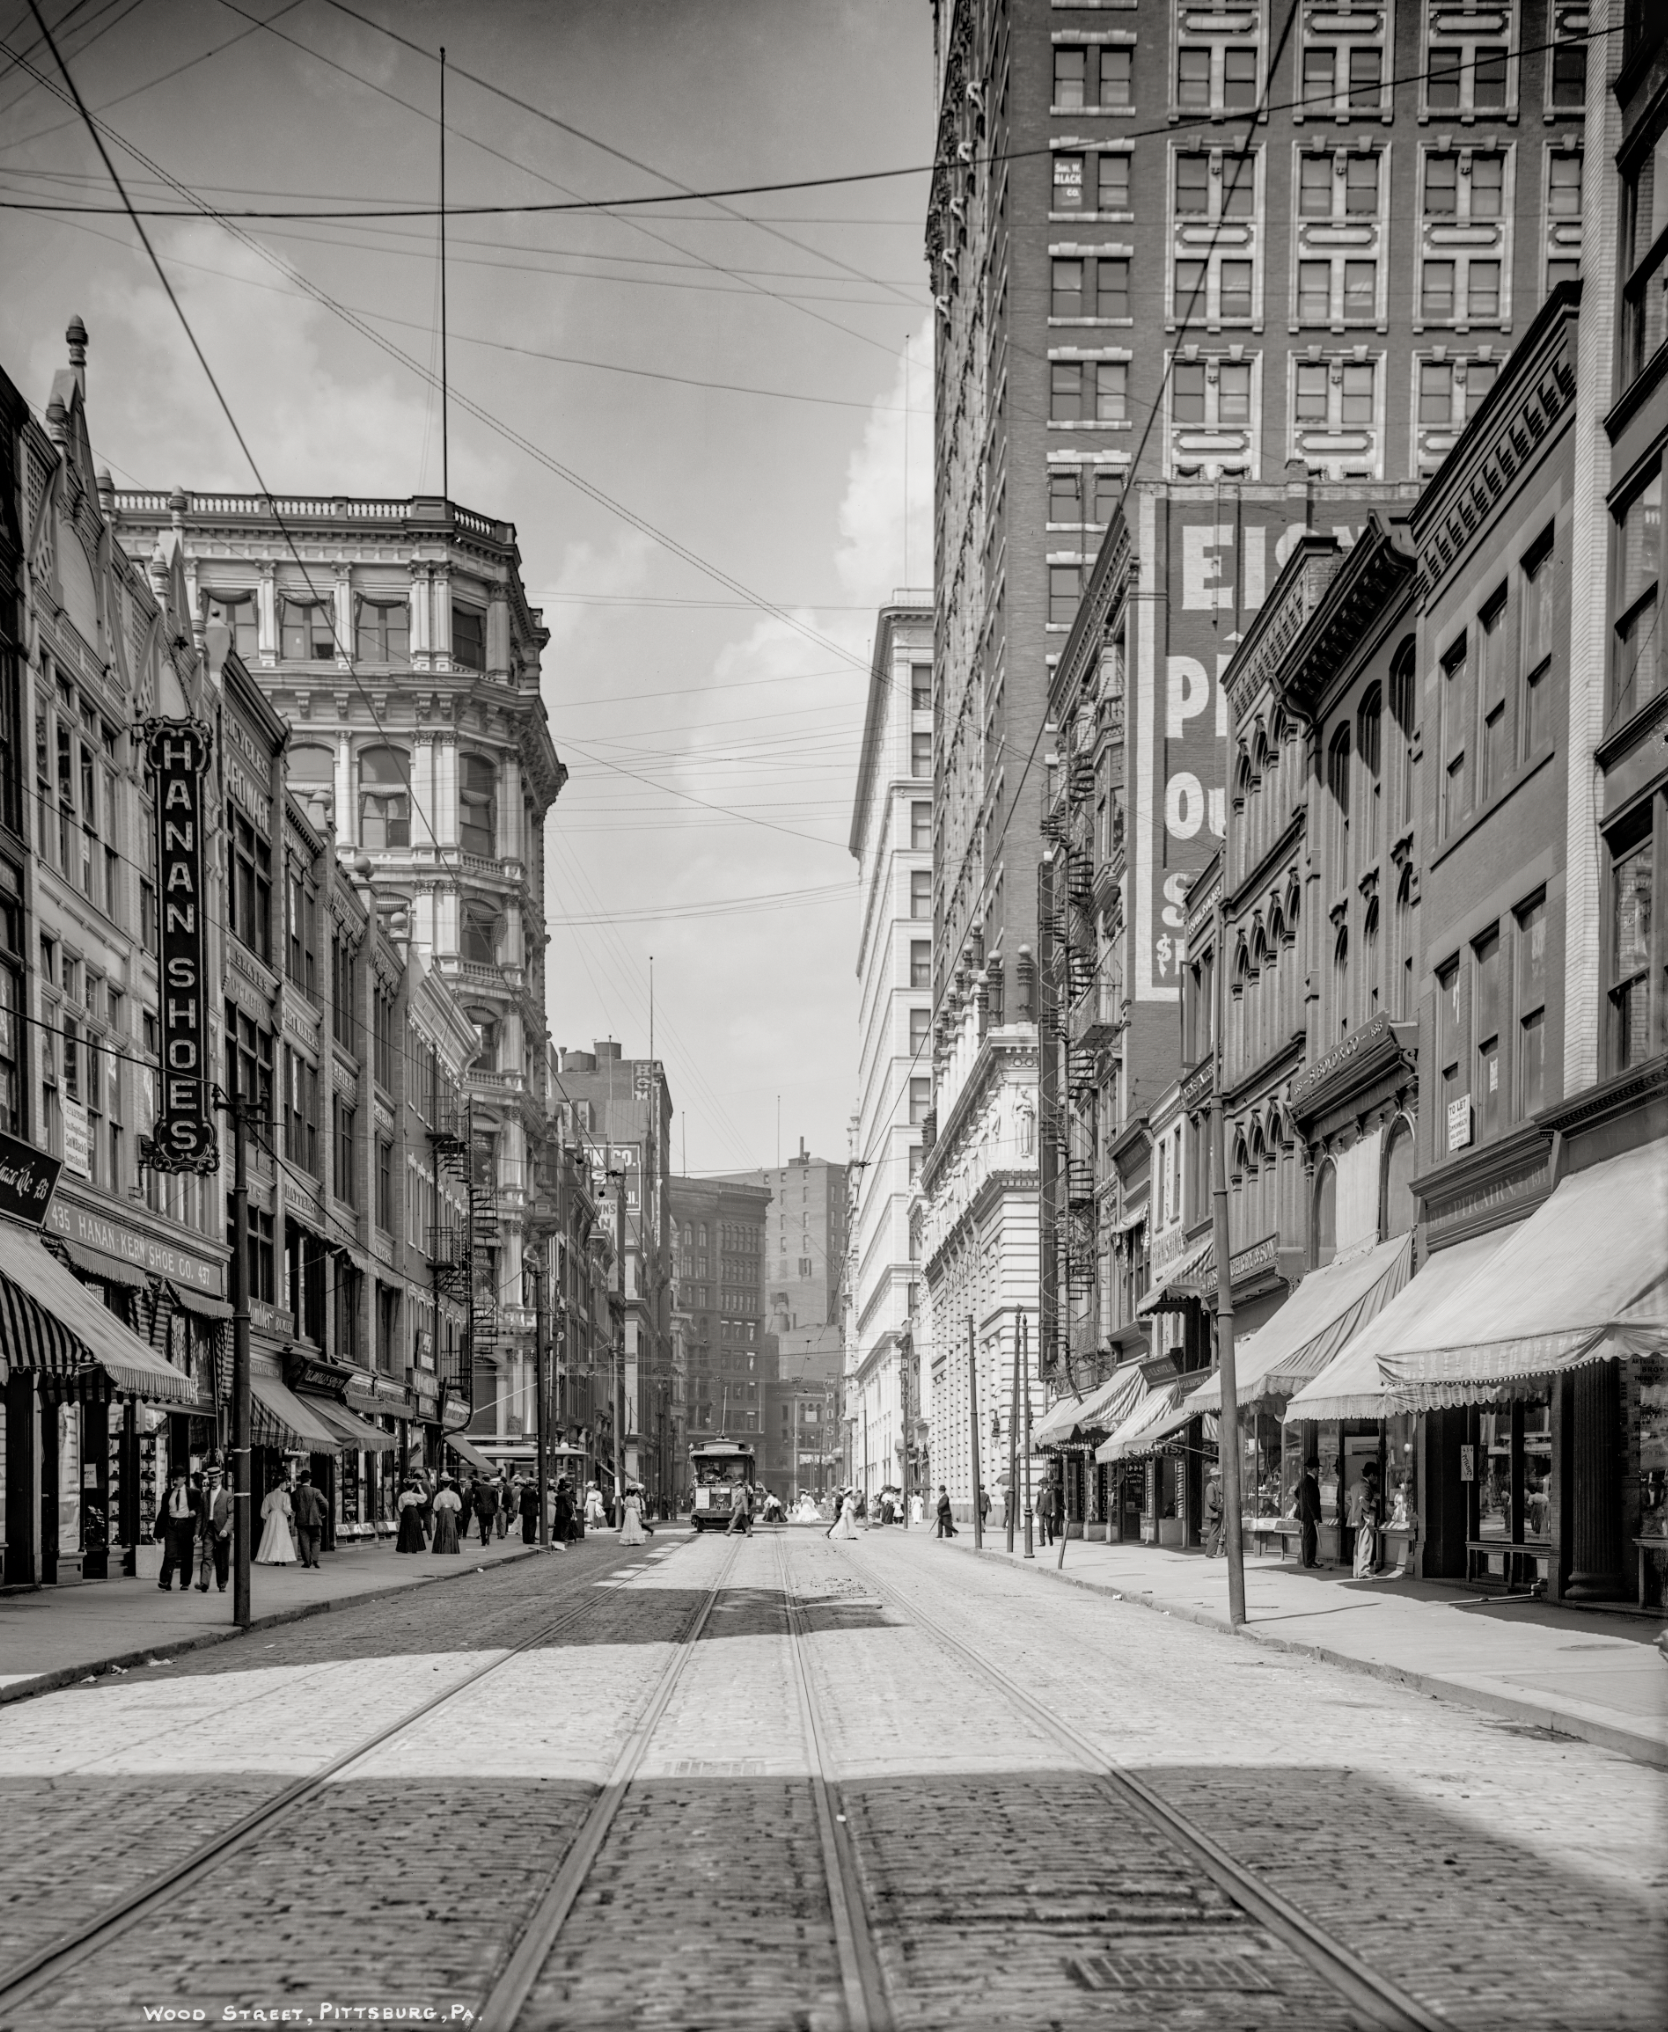 Pittsburgh, Pennsylvania Photo, Wood Street, 1900